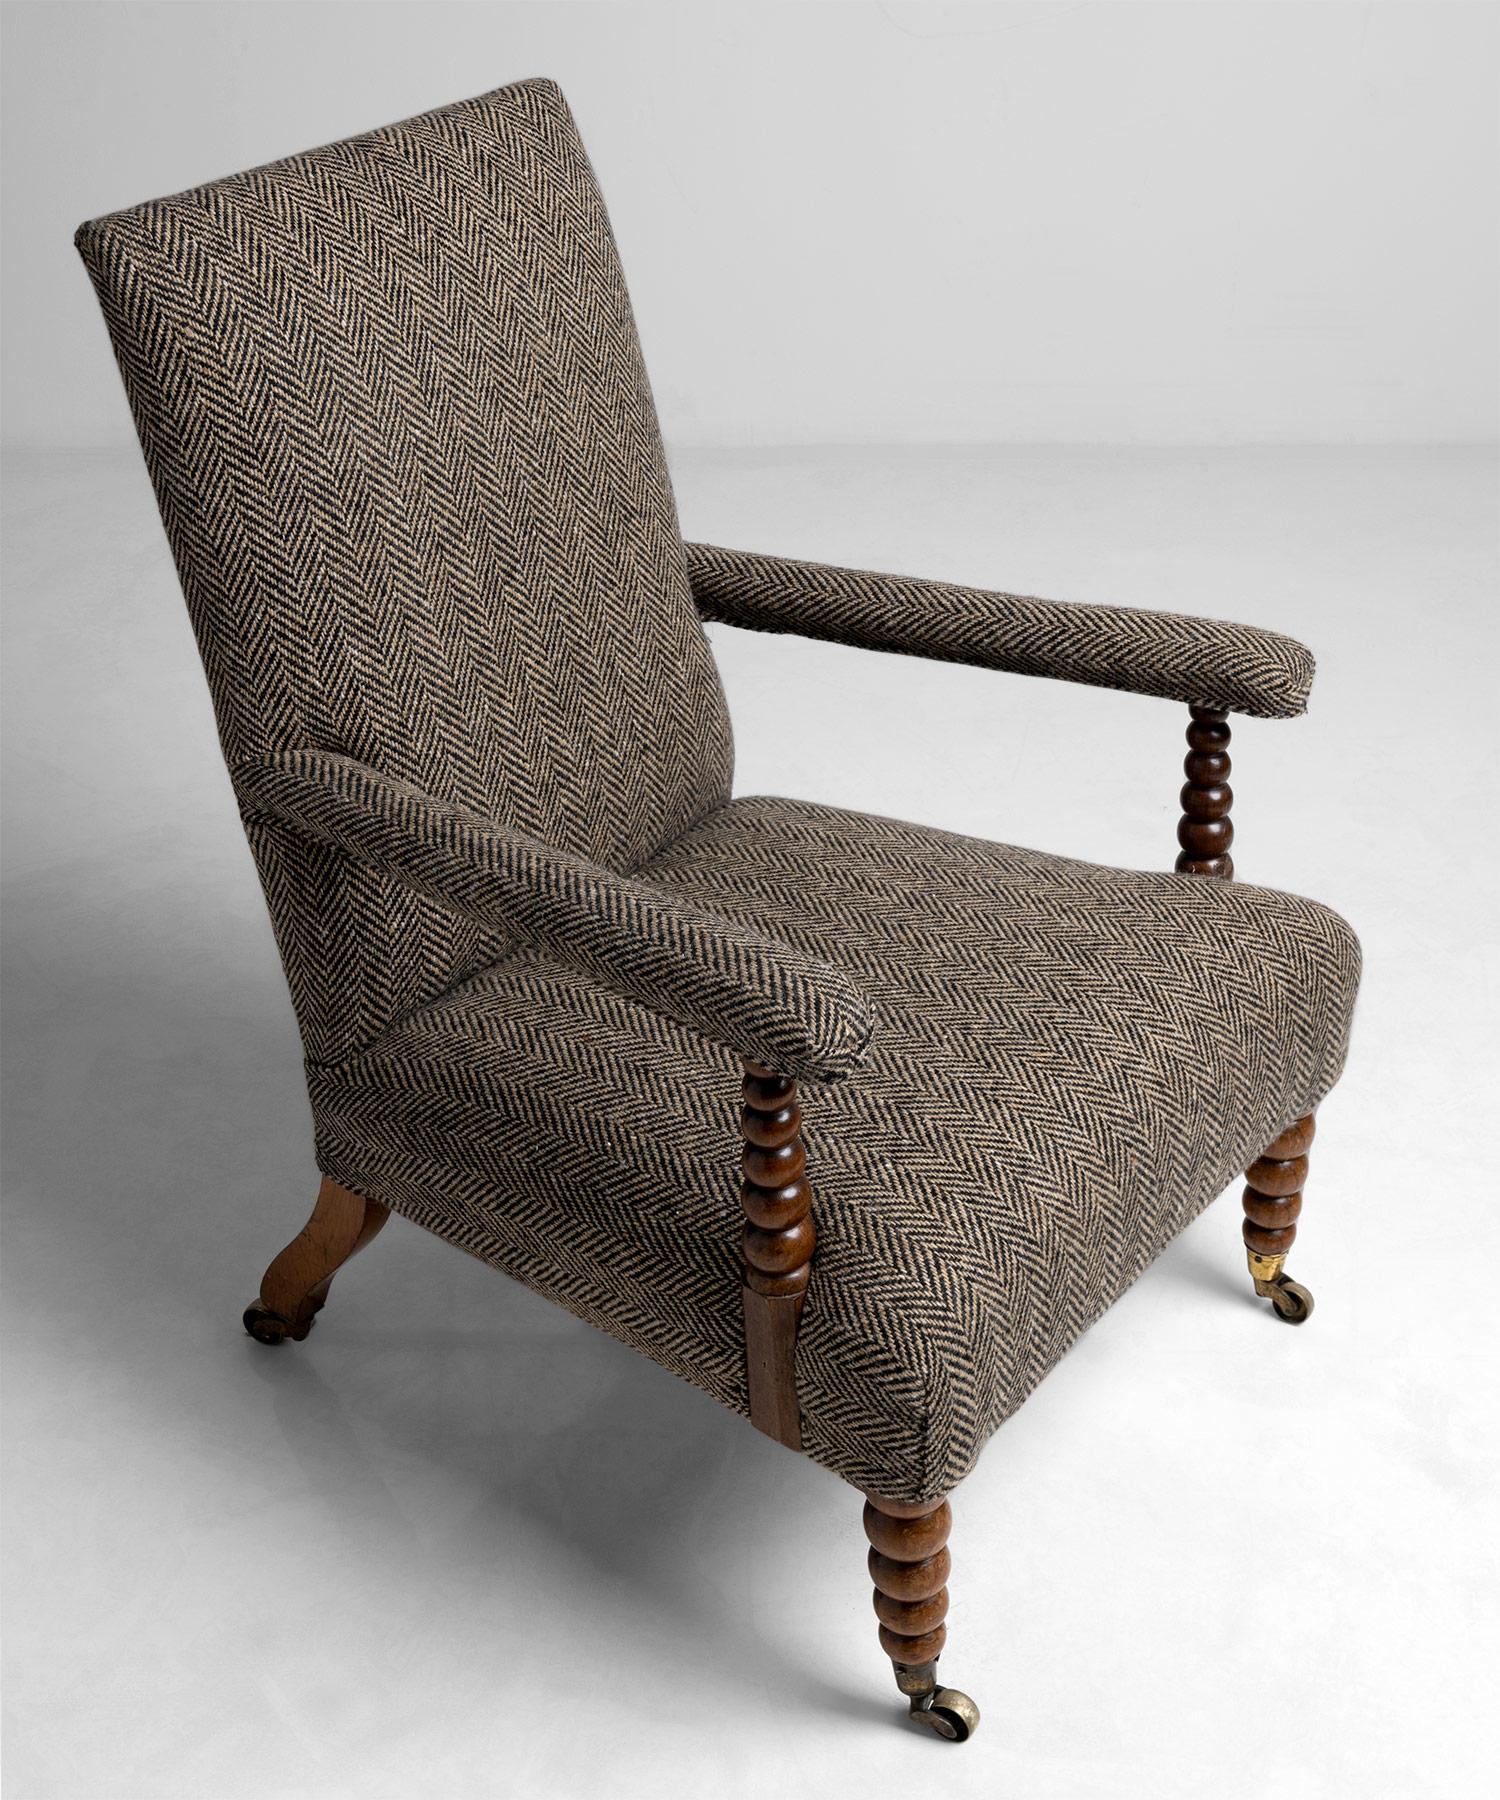 English Walnut Bobbin Chair in Virgin Wool Herringbone by Pierre Frey, England 1820